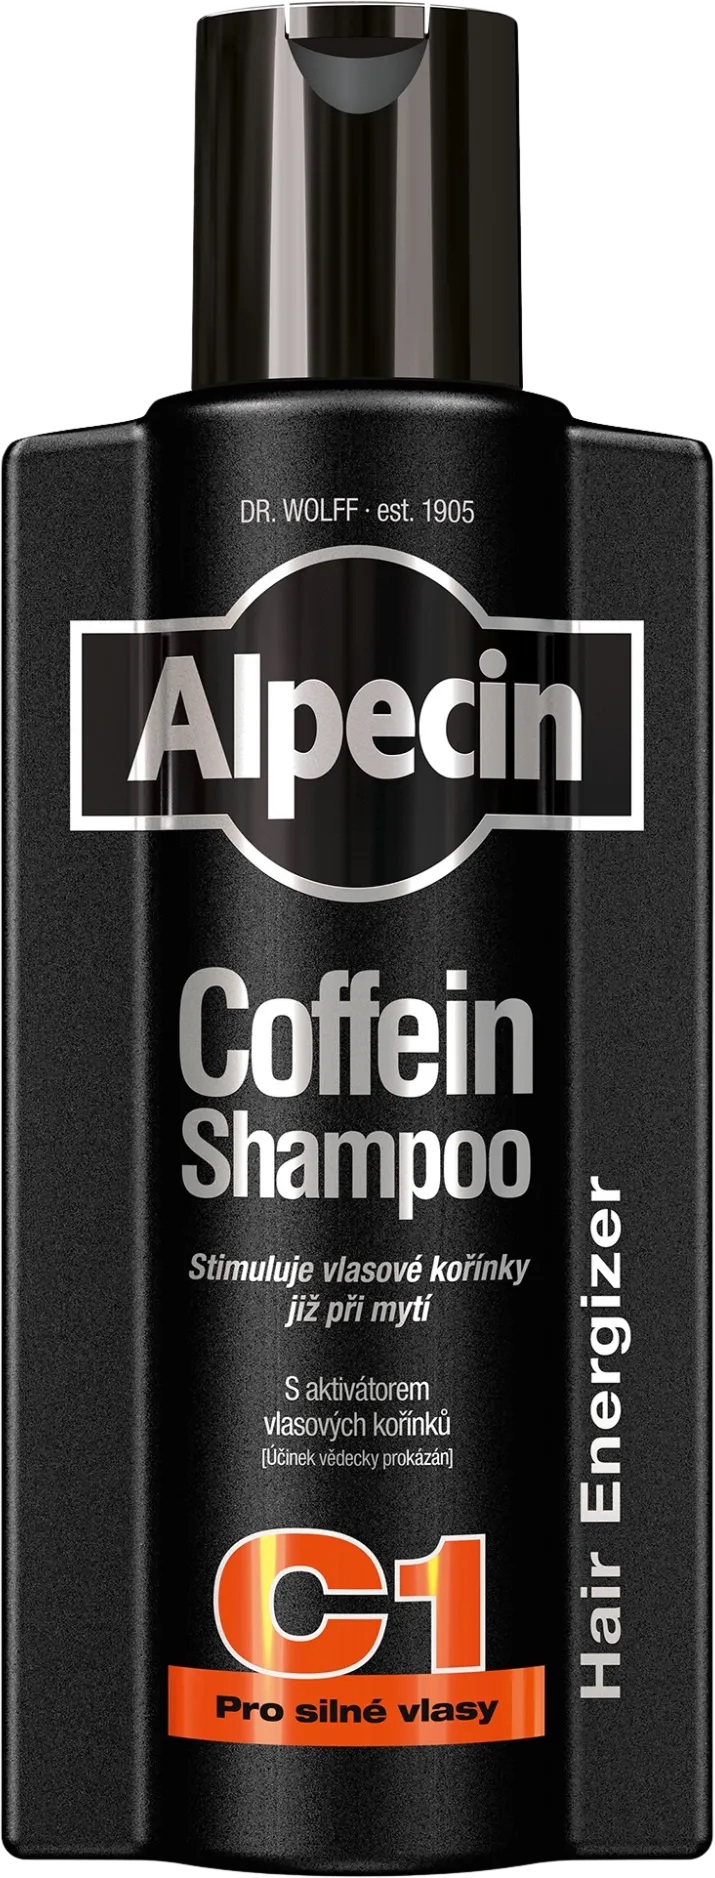 Alpecin Kofeinový šampon proti vypadávání vlasů C1 Black Edition (Coffein Shampoo) 375 ml